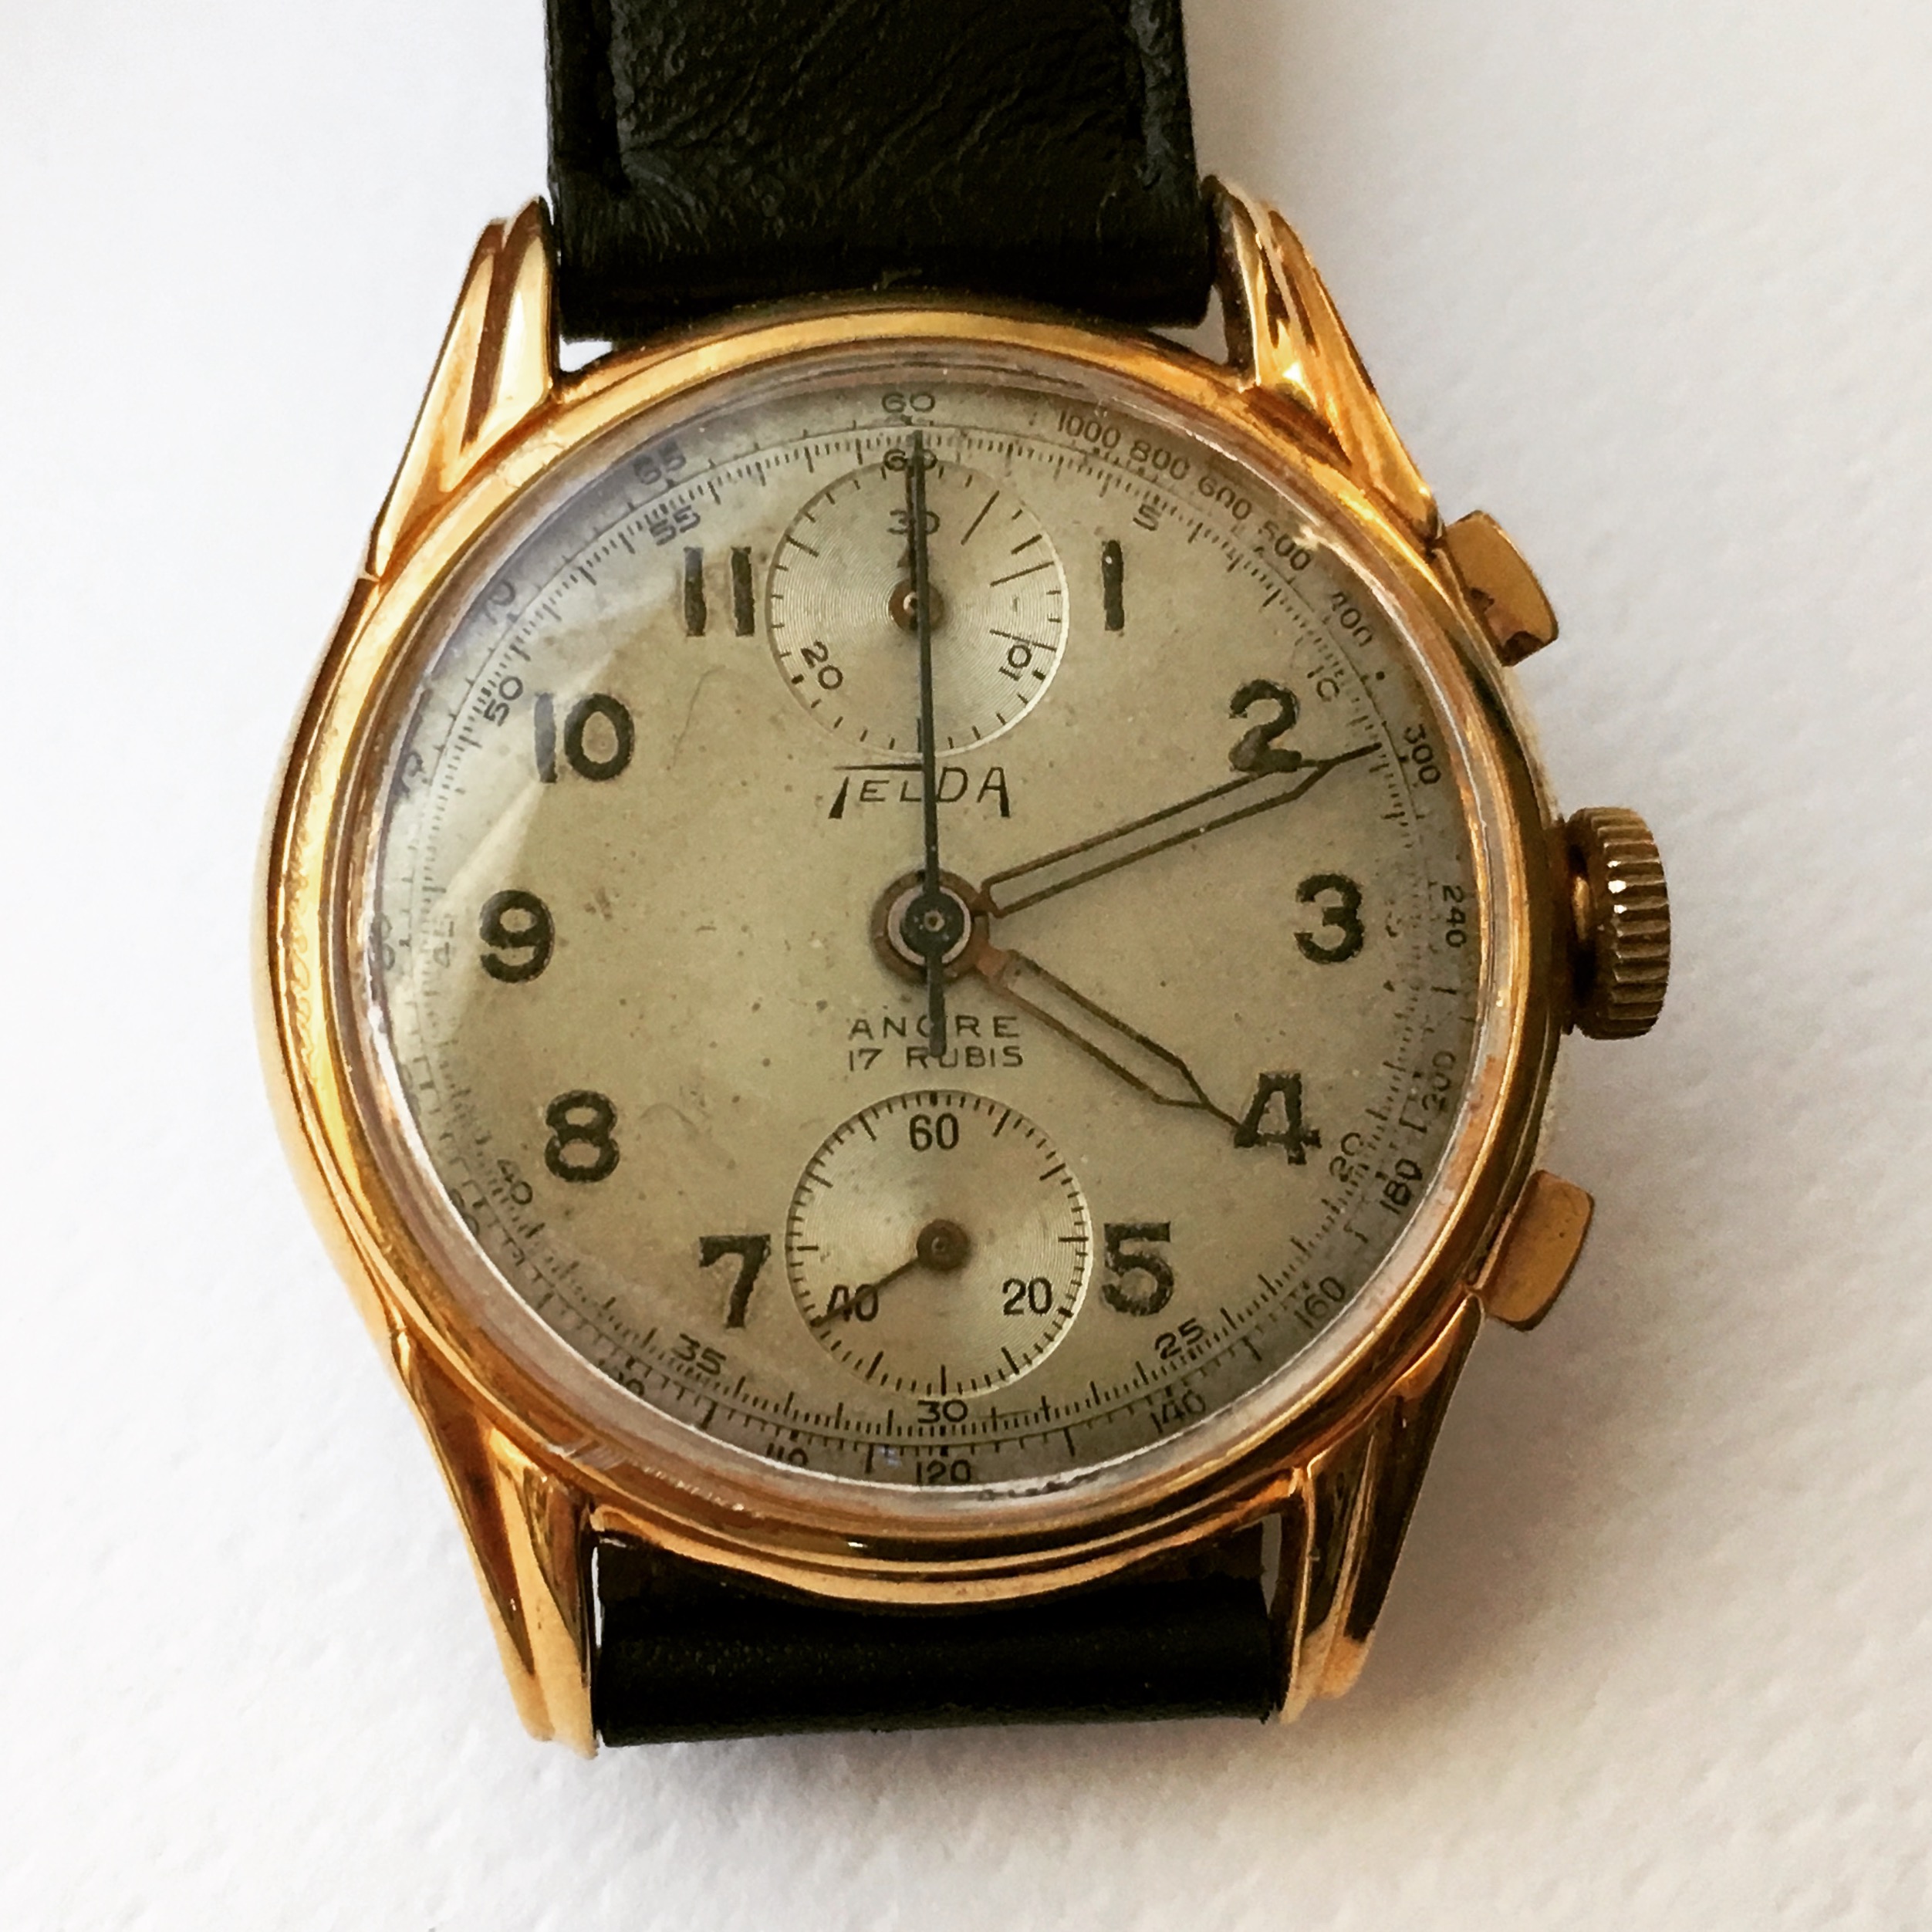 Vintage Telda Chronograph Men's Watch Venus 170 from 1950s - Telda